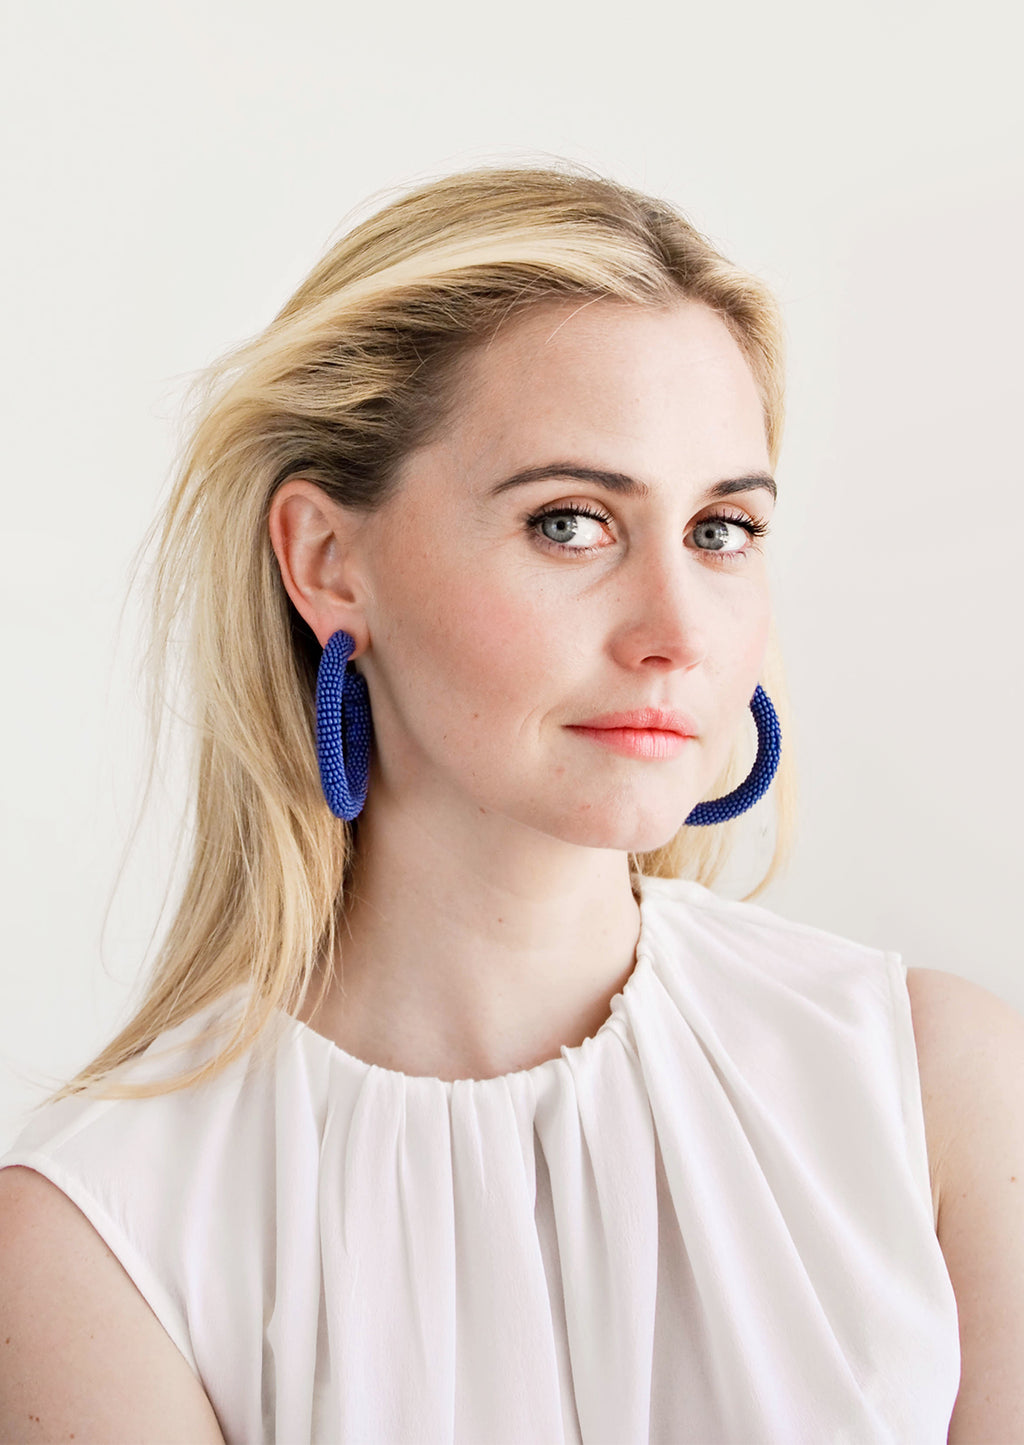 2: Model wears blue beaded hoop earrings and white blouse.